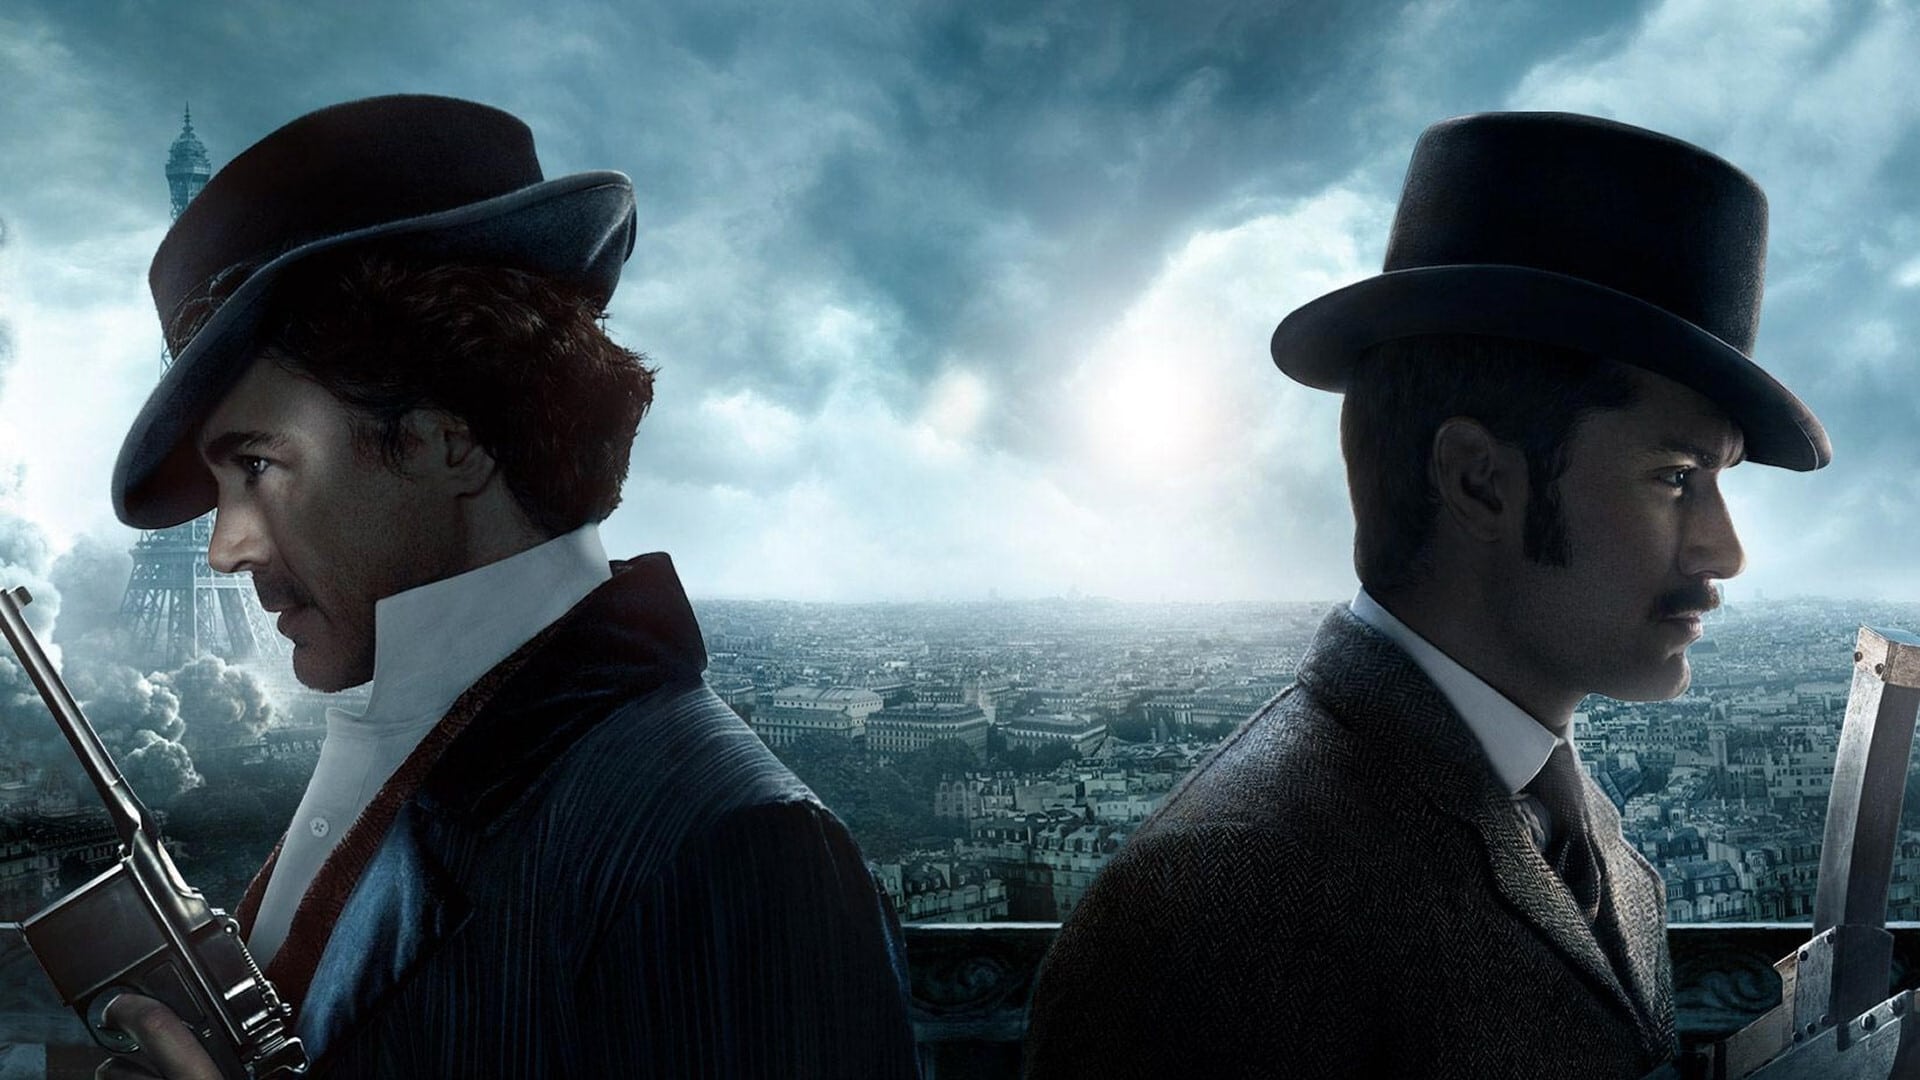 Image du film Sherlock Holmes : Jeu d'ombres v2d4ai6dlxz6cnikdlki1eeosavjpg